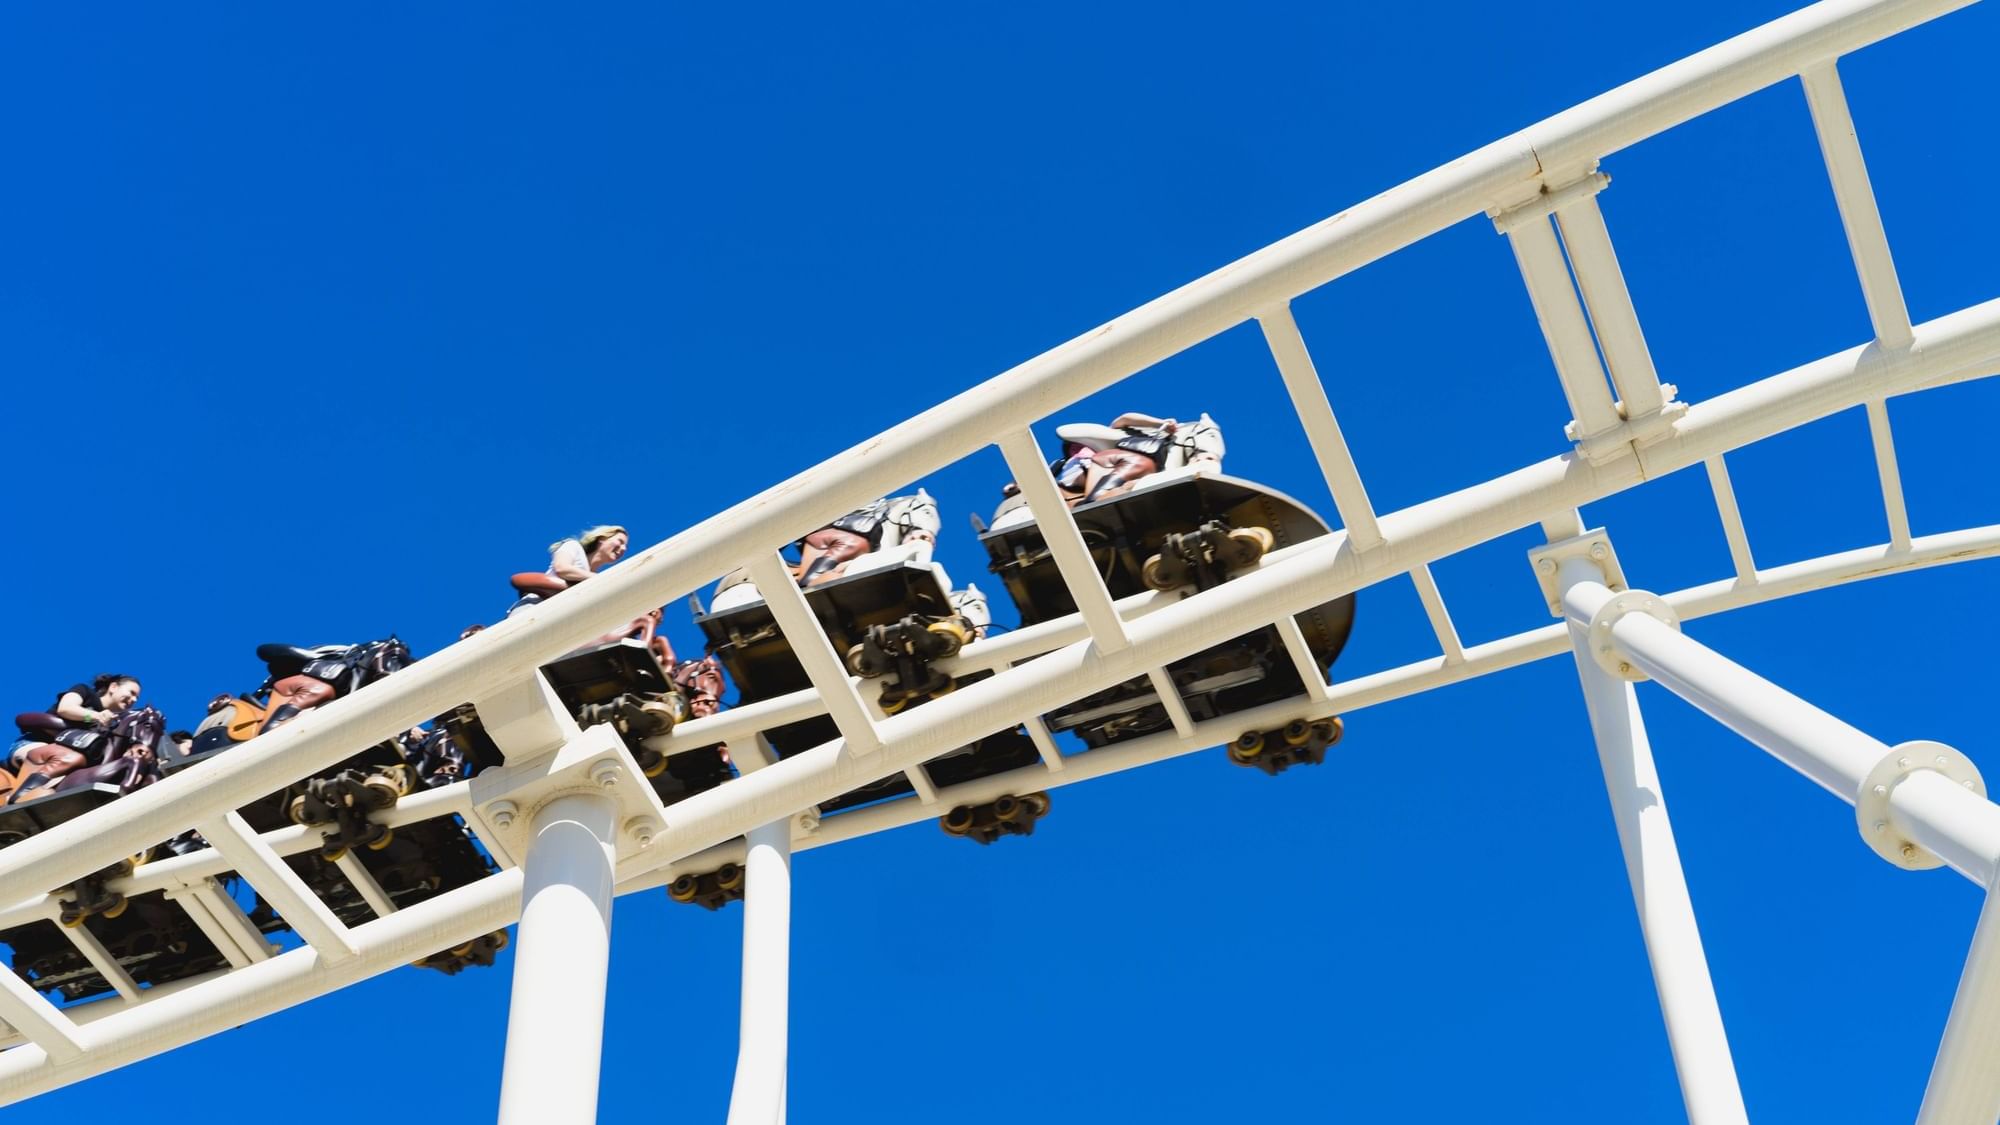 Top shot of the rollercoaster at Disneyland at Original Hotels